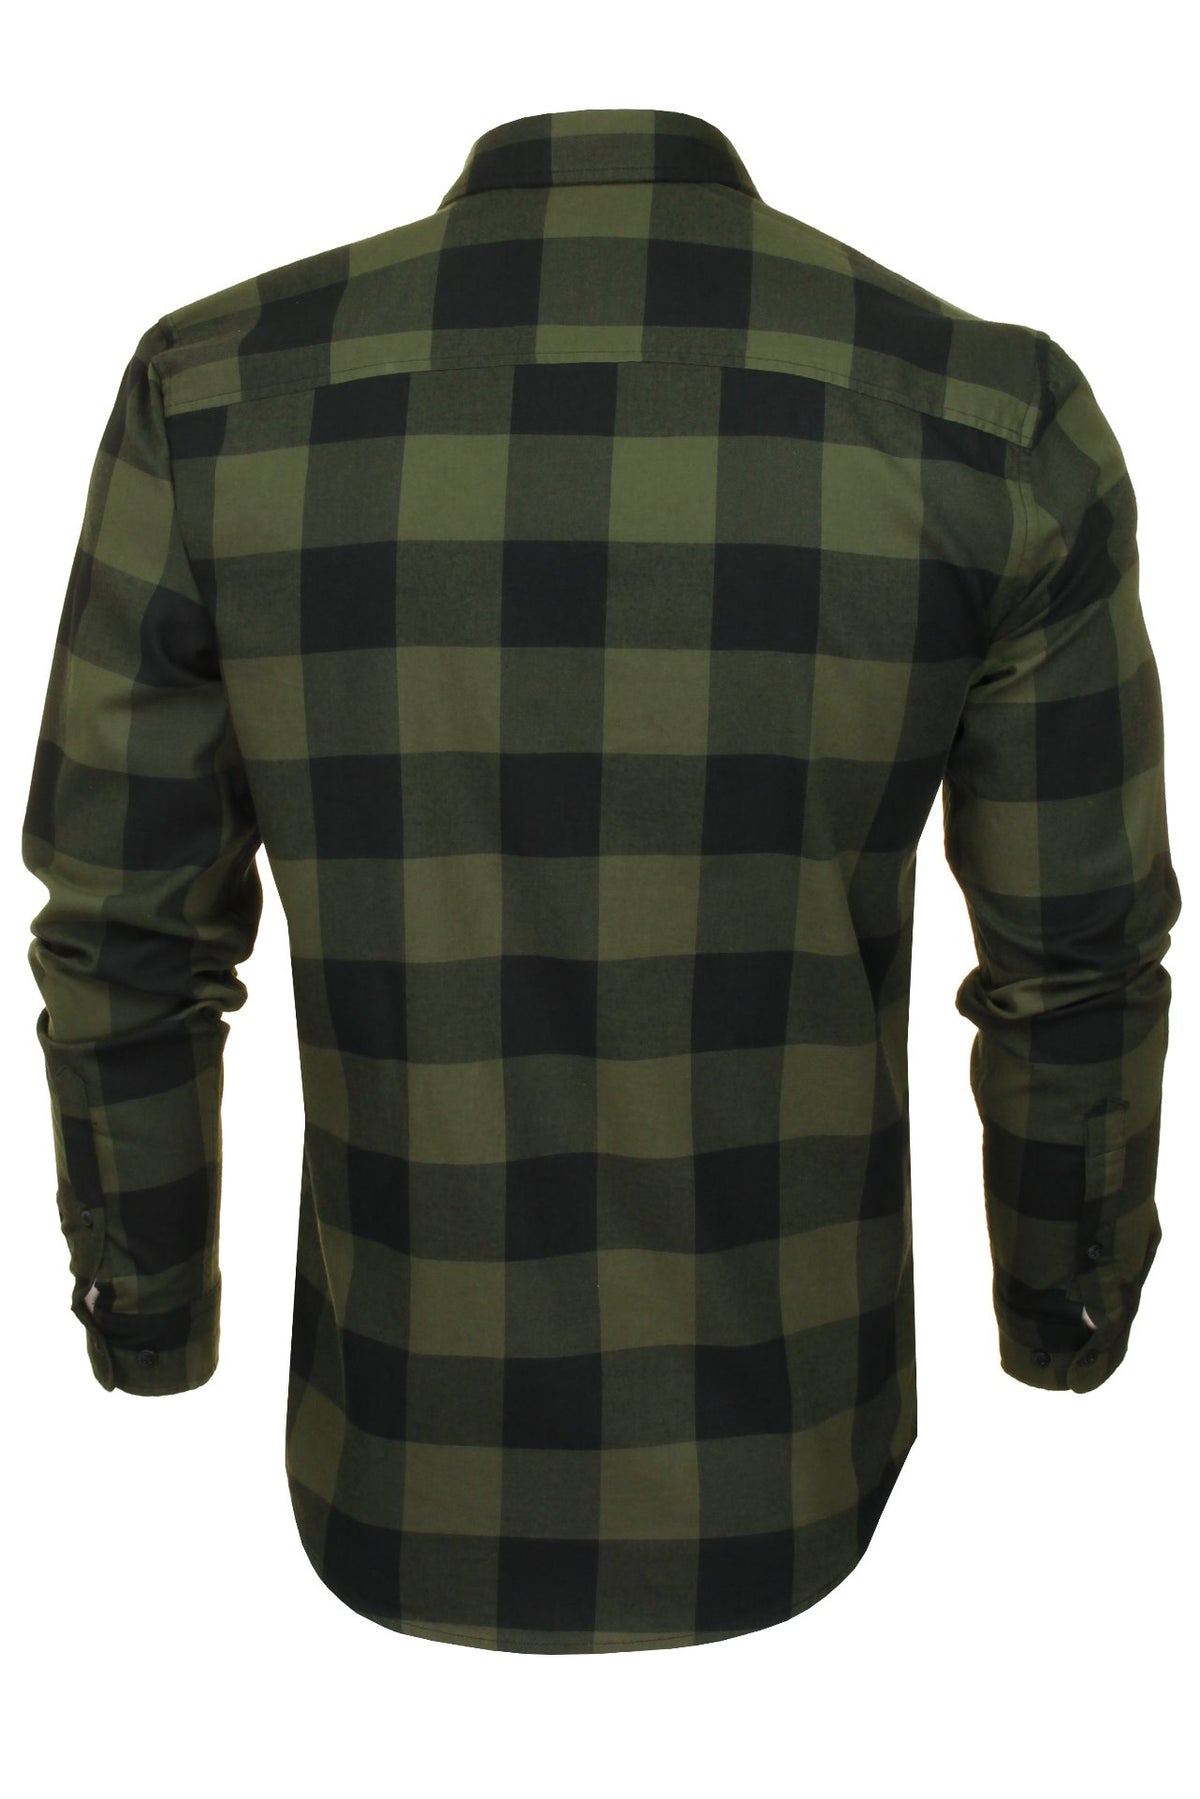 Jack & Jones Men's 'Gingham' Check Twill Shirt - Long Sleeved, 03, 12181602, Dusty Olive